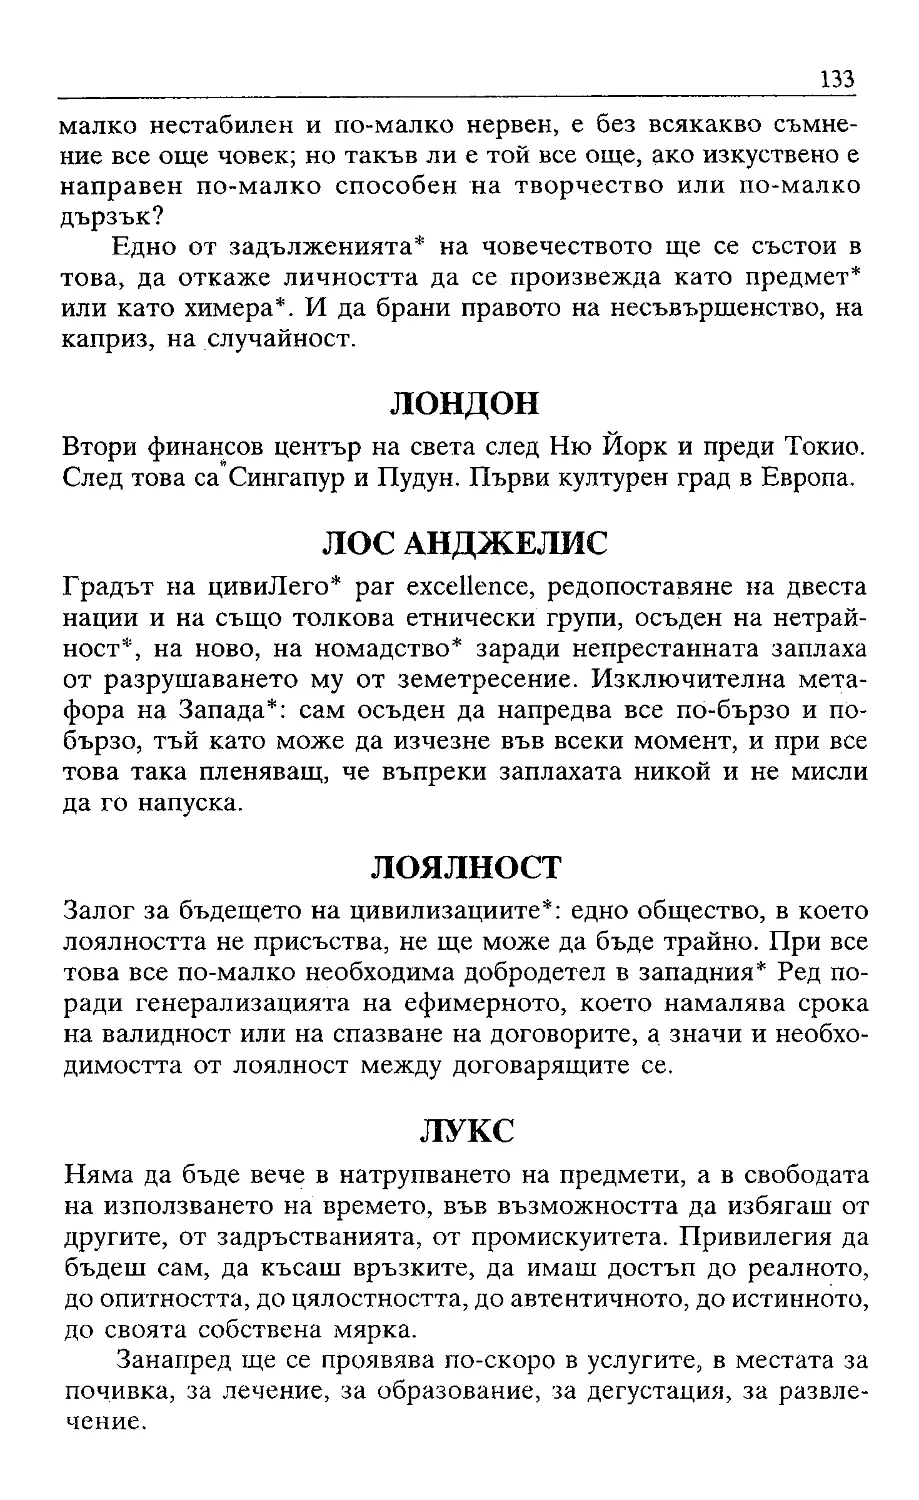 ﻿Жак Атали. Речник на 21 век_Page_065_Image_0001_2